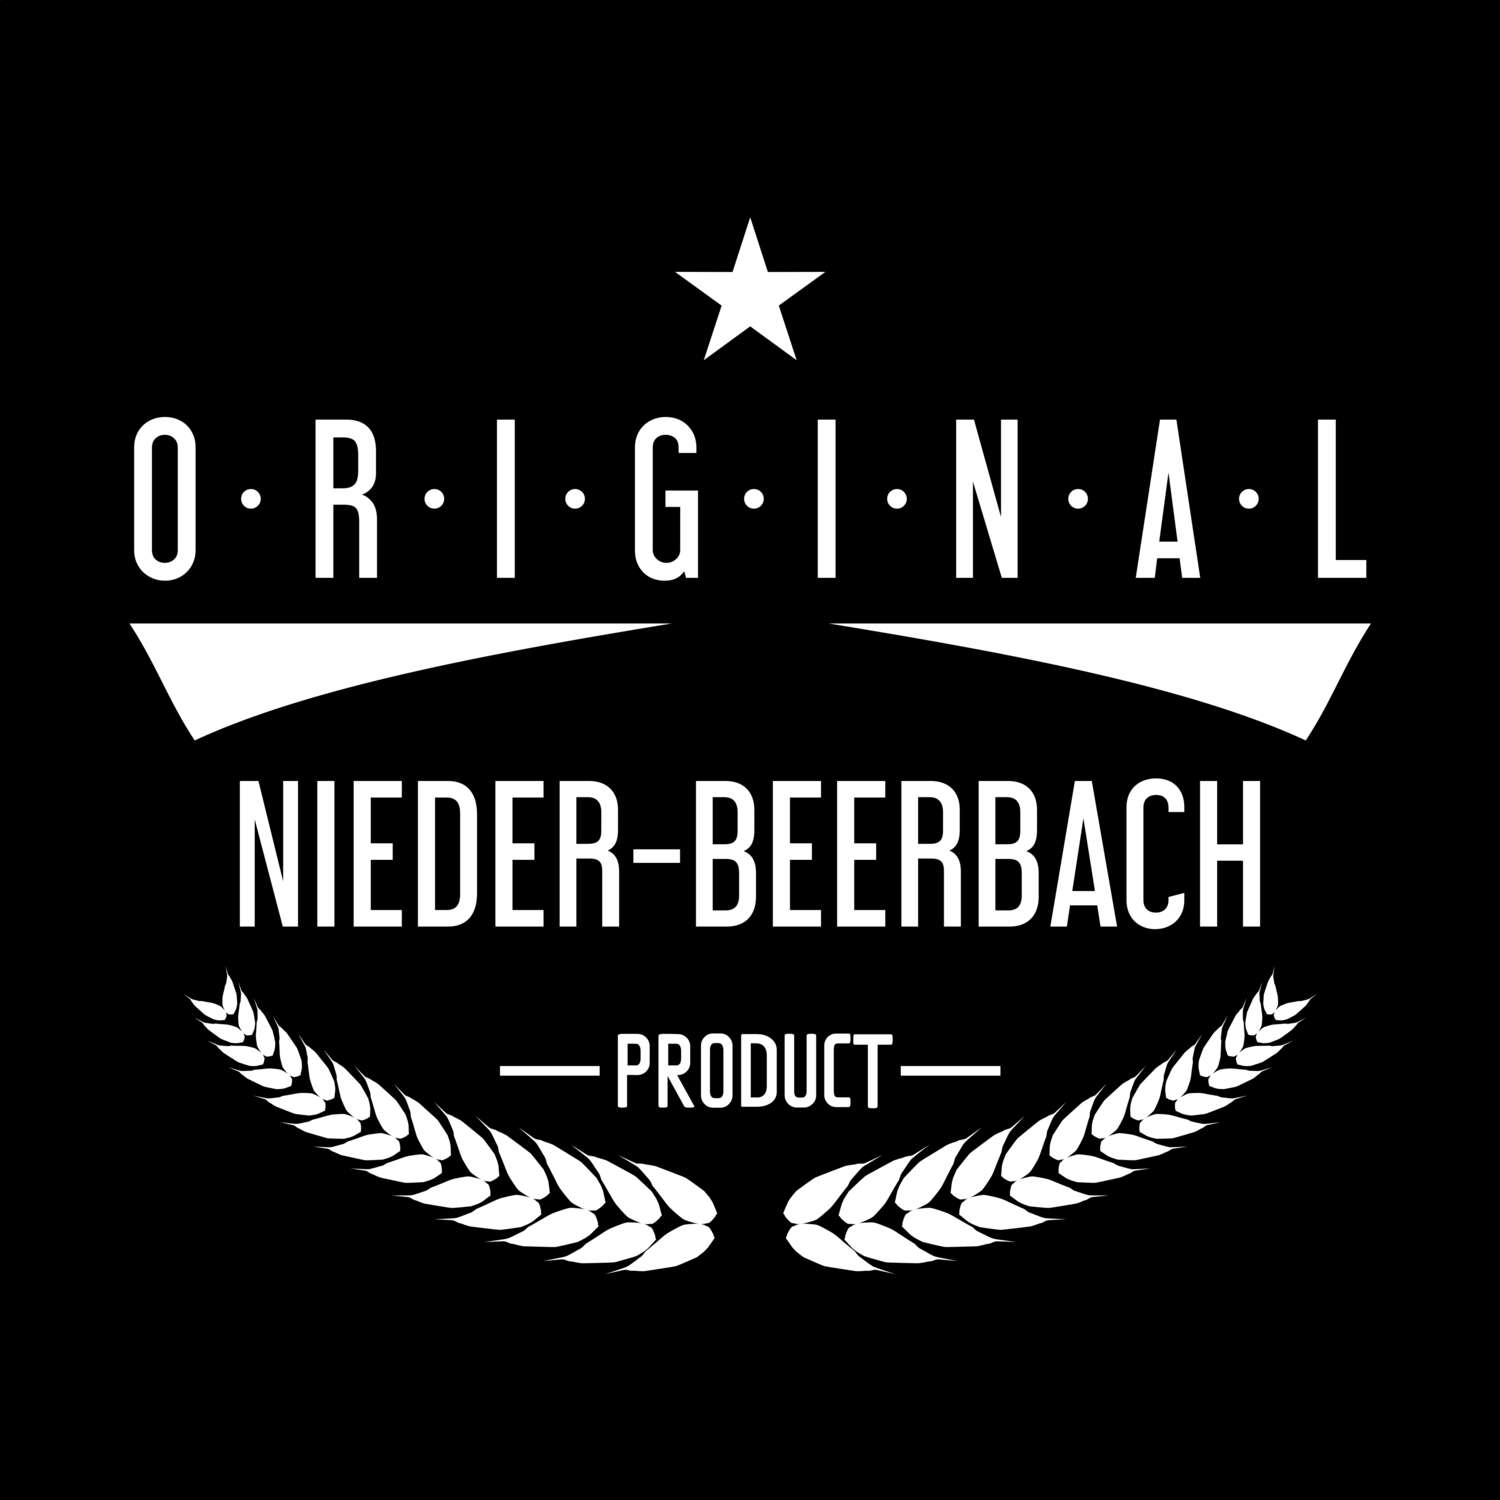 Nieder-Beerbach T-Shirt »Original Product«